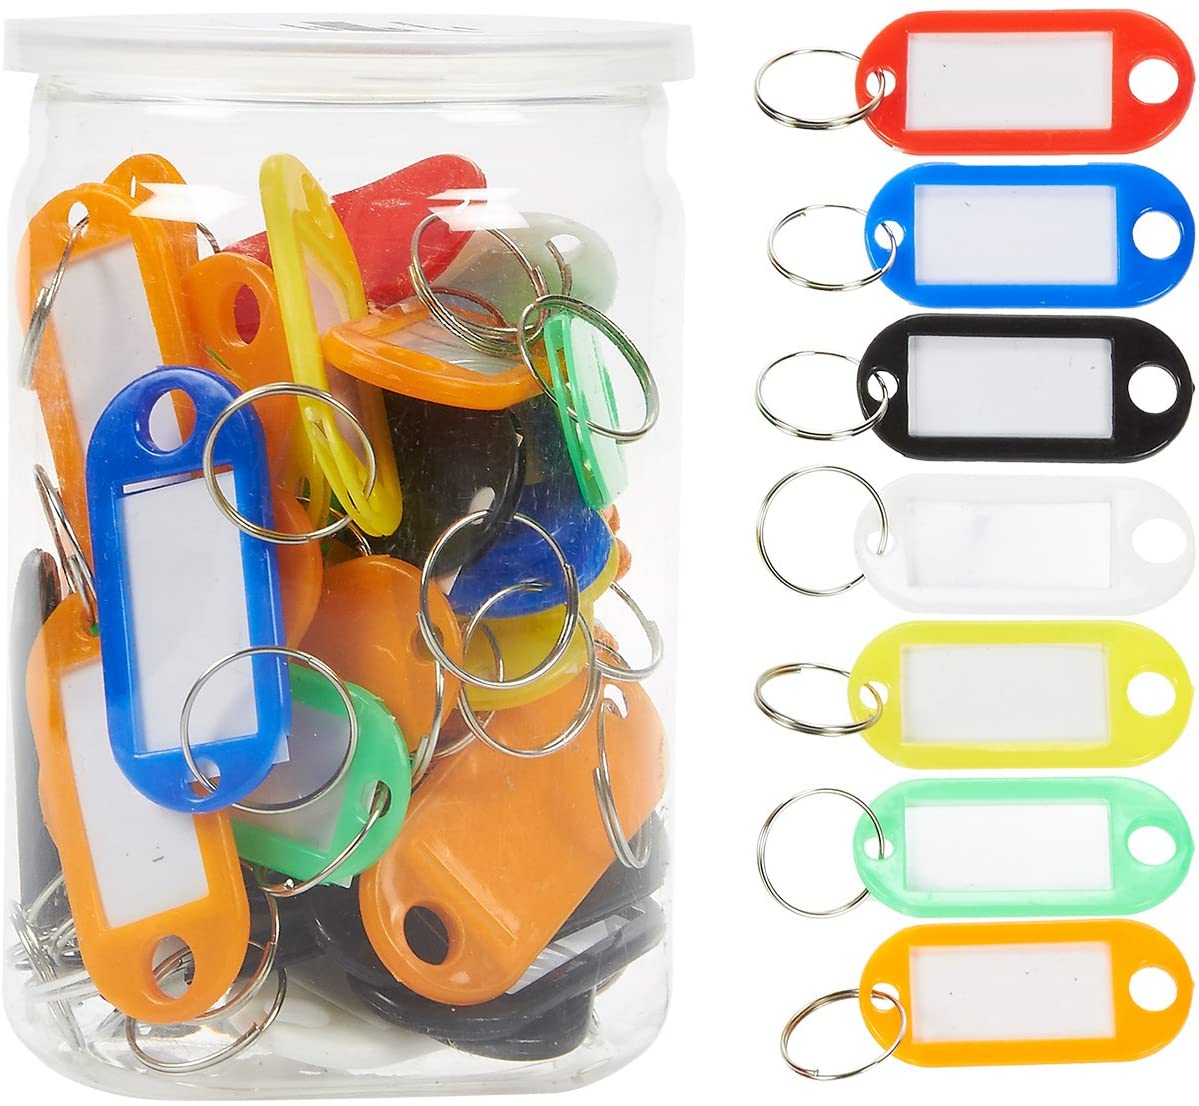 10 Stuk Van Sleutelhanger Cover Plastic Tag-Multi-color Sleutelhanger Cover Tag Set Geschikt Voor Bagage, sleutels, Huisdieren